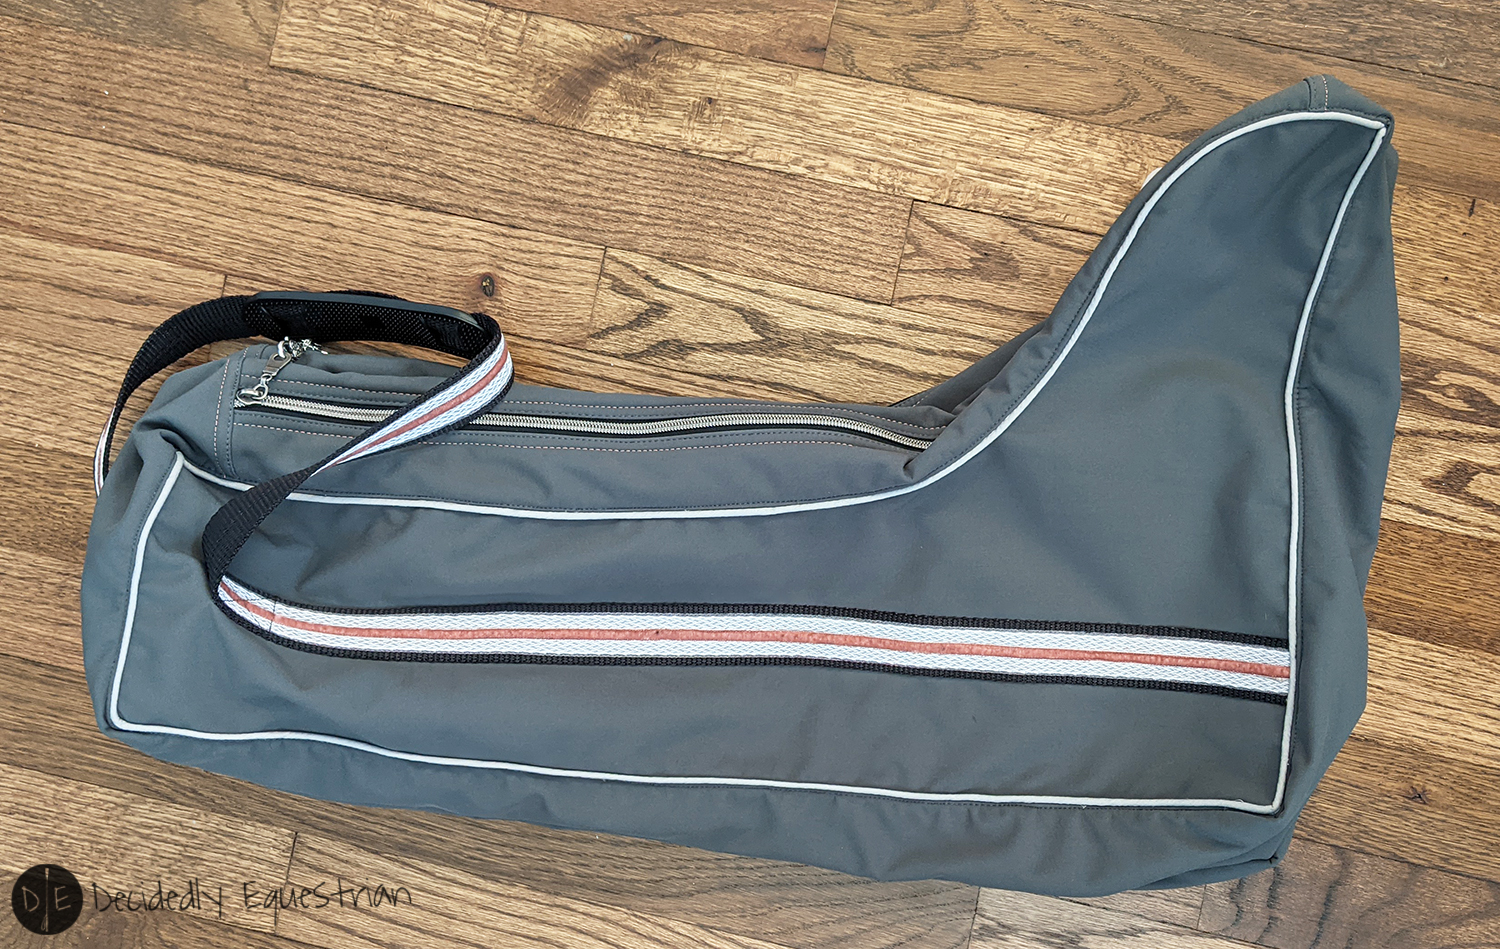 DK Equestrian Gear Custom Bags Review